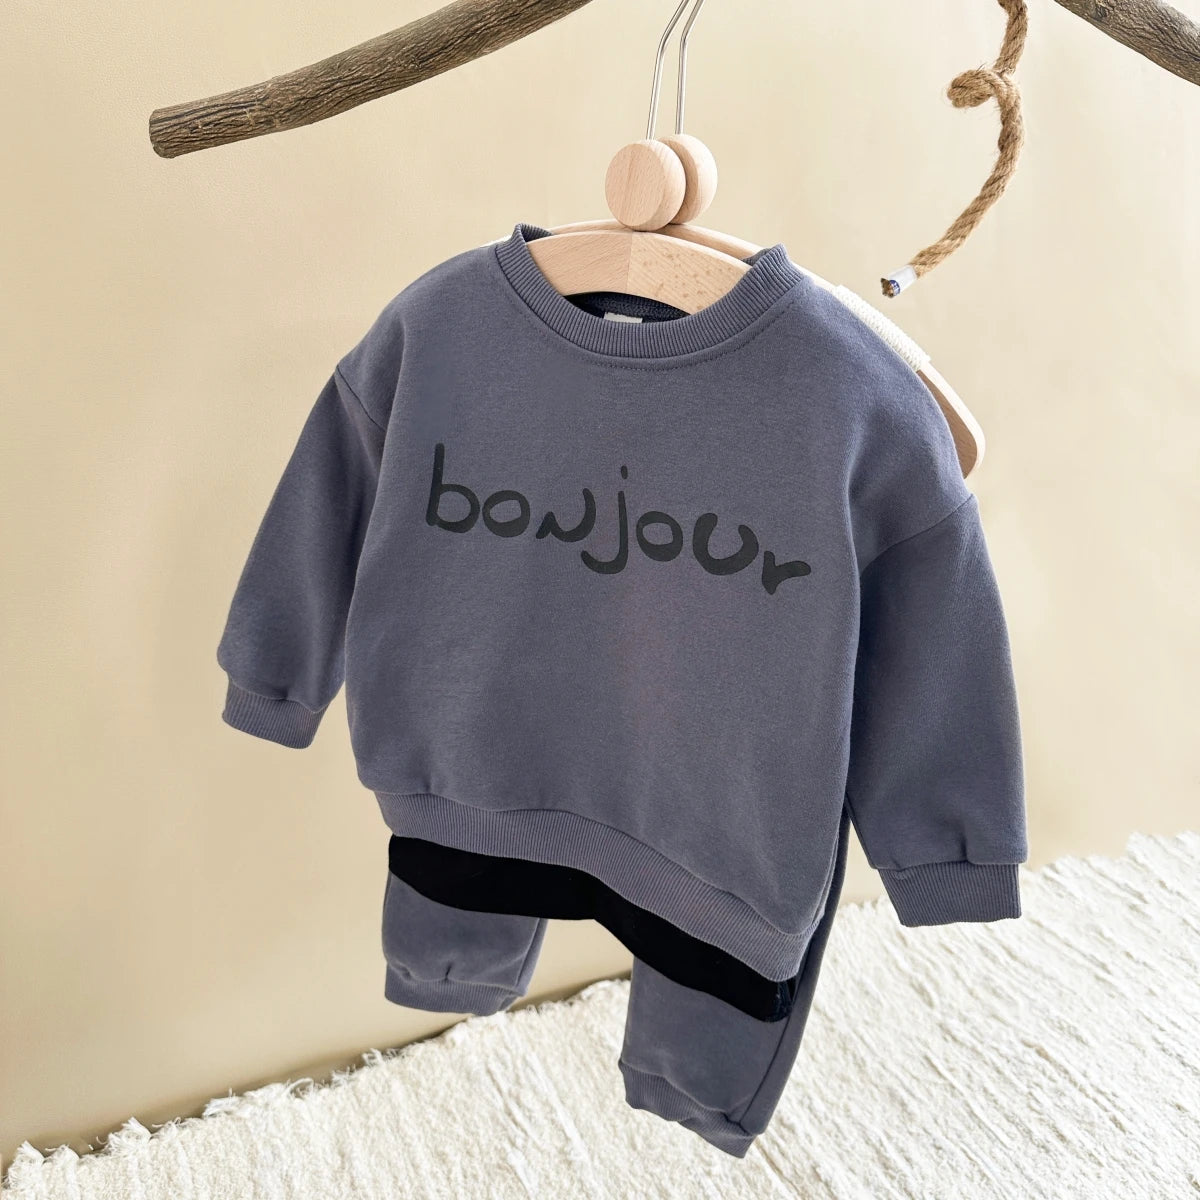 Bonjour Kids Sweatshirt and Sweatpants Set - Peachy Bloomers